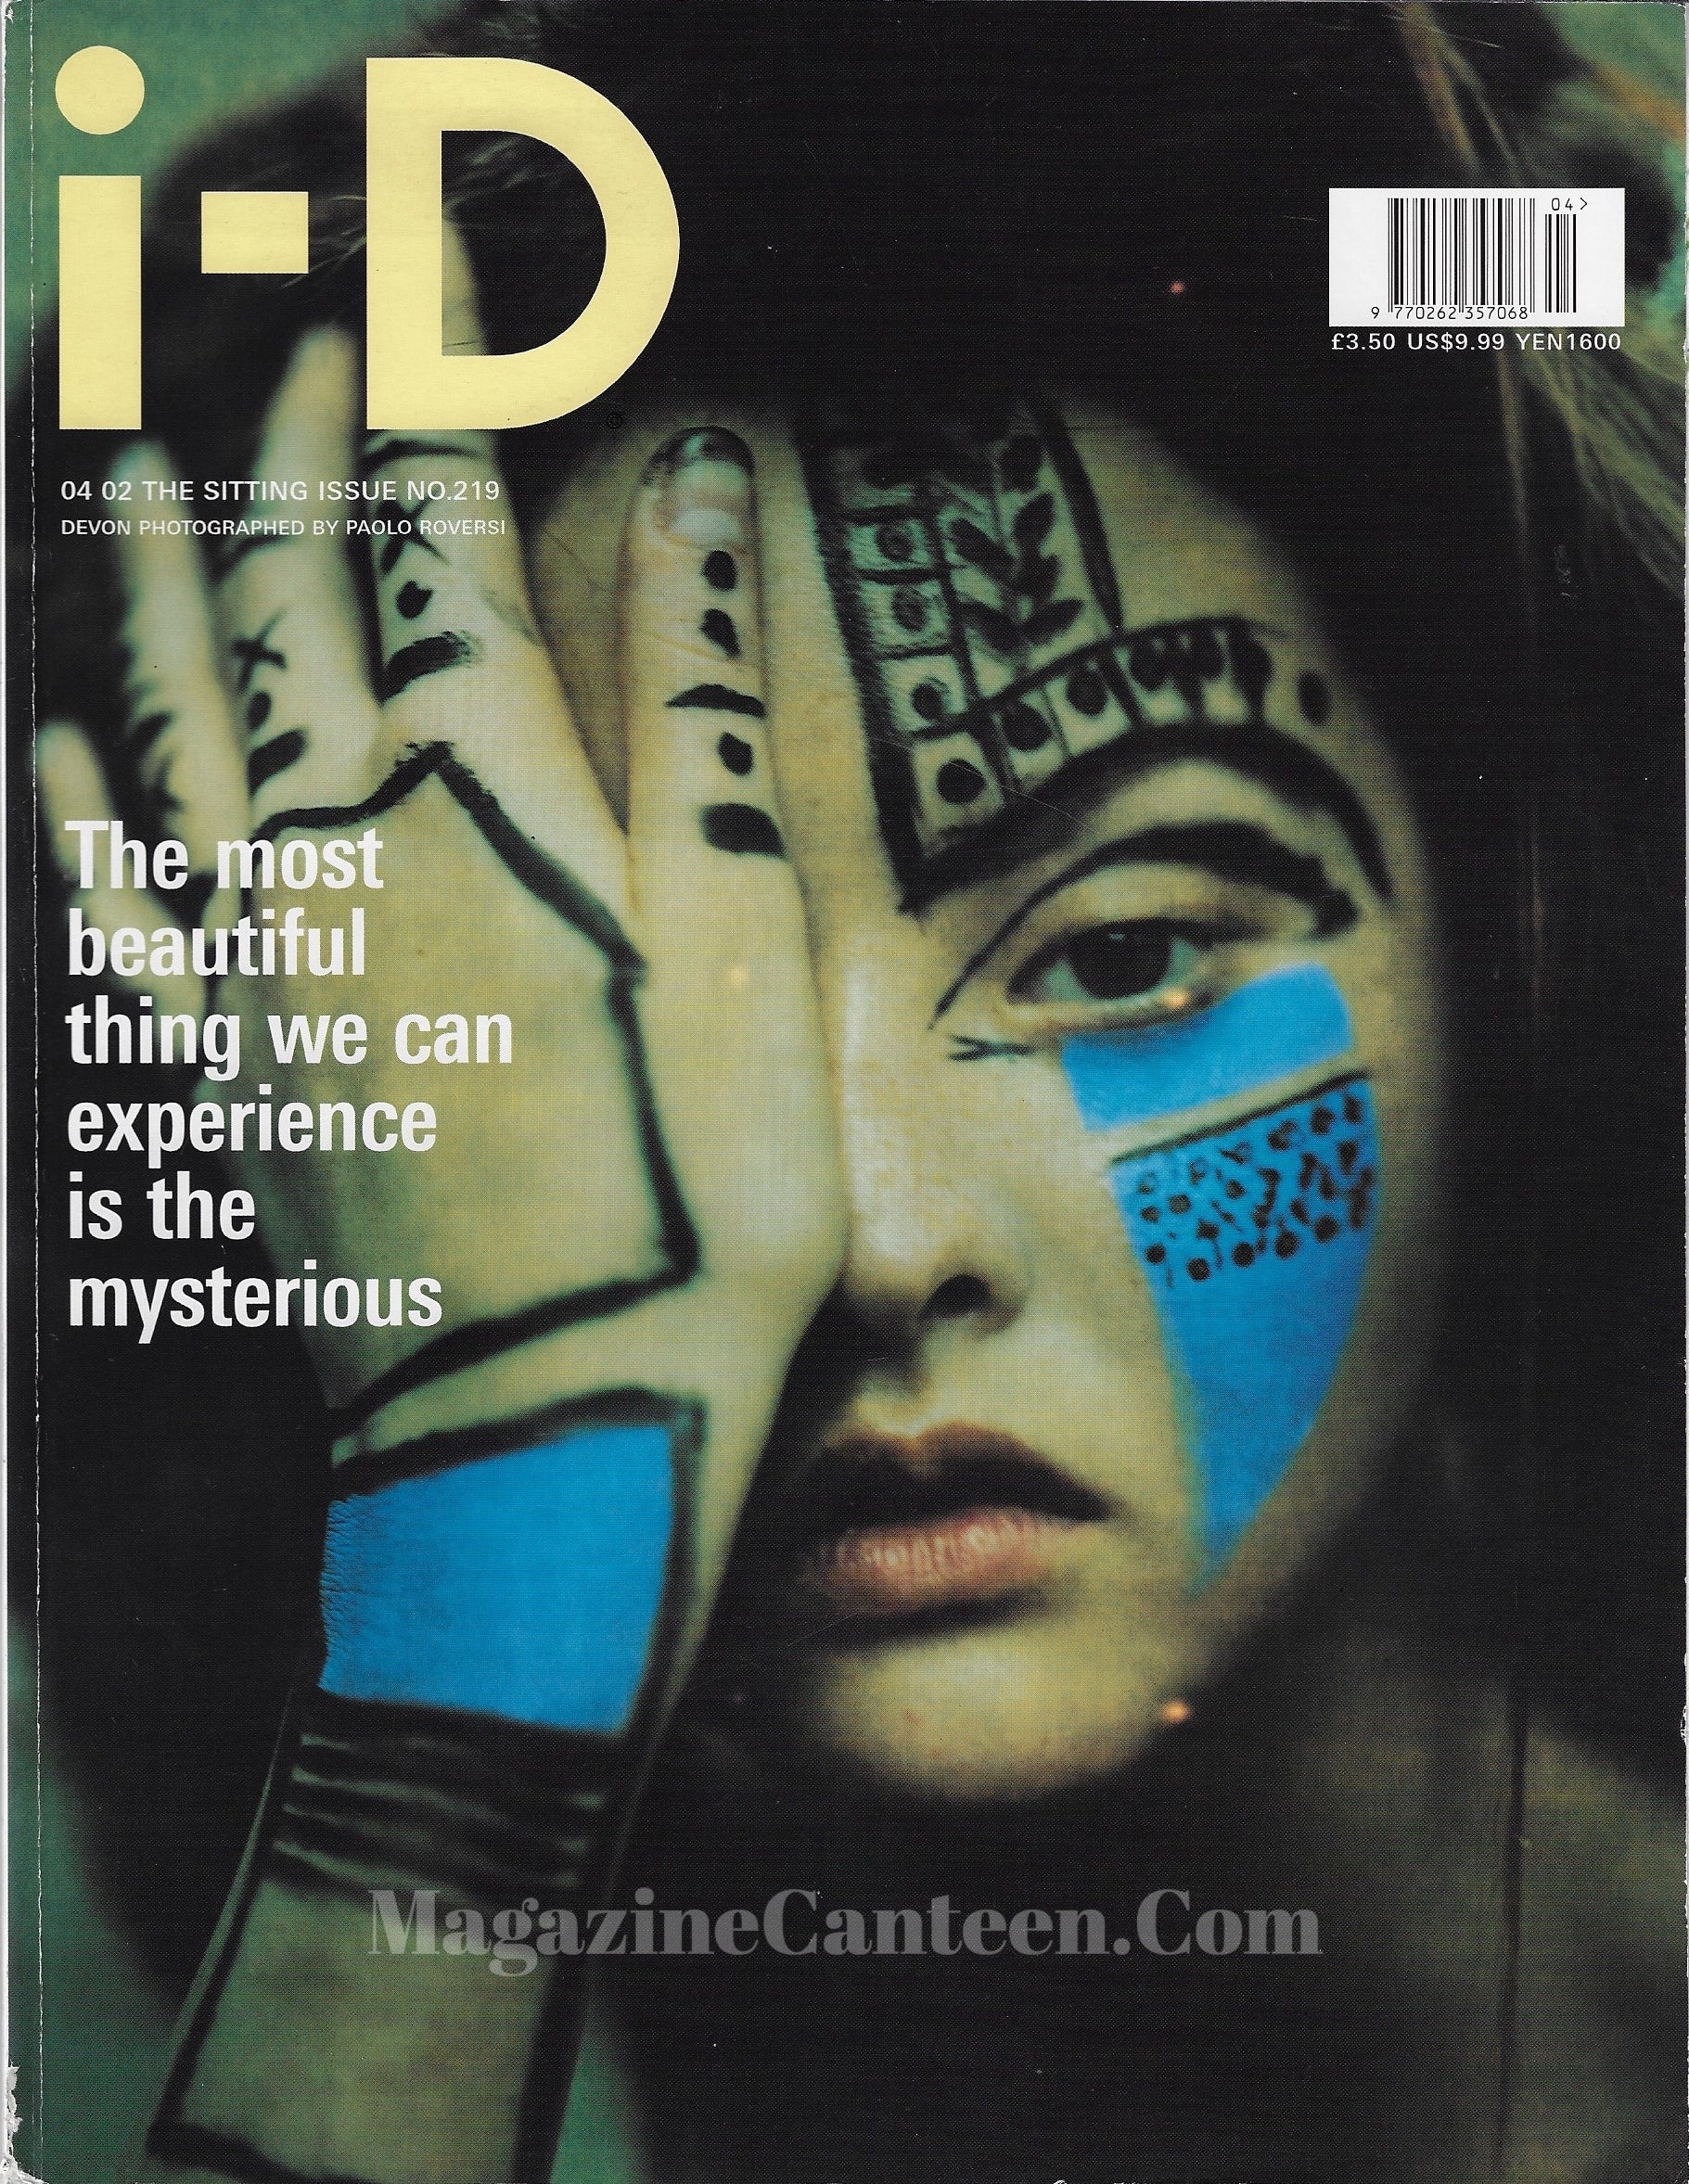 I-D Magazine 219 - Devon Aoki 2002